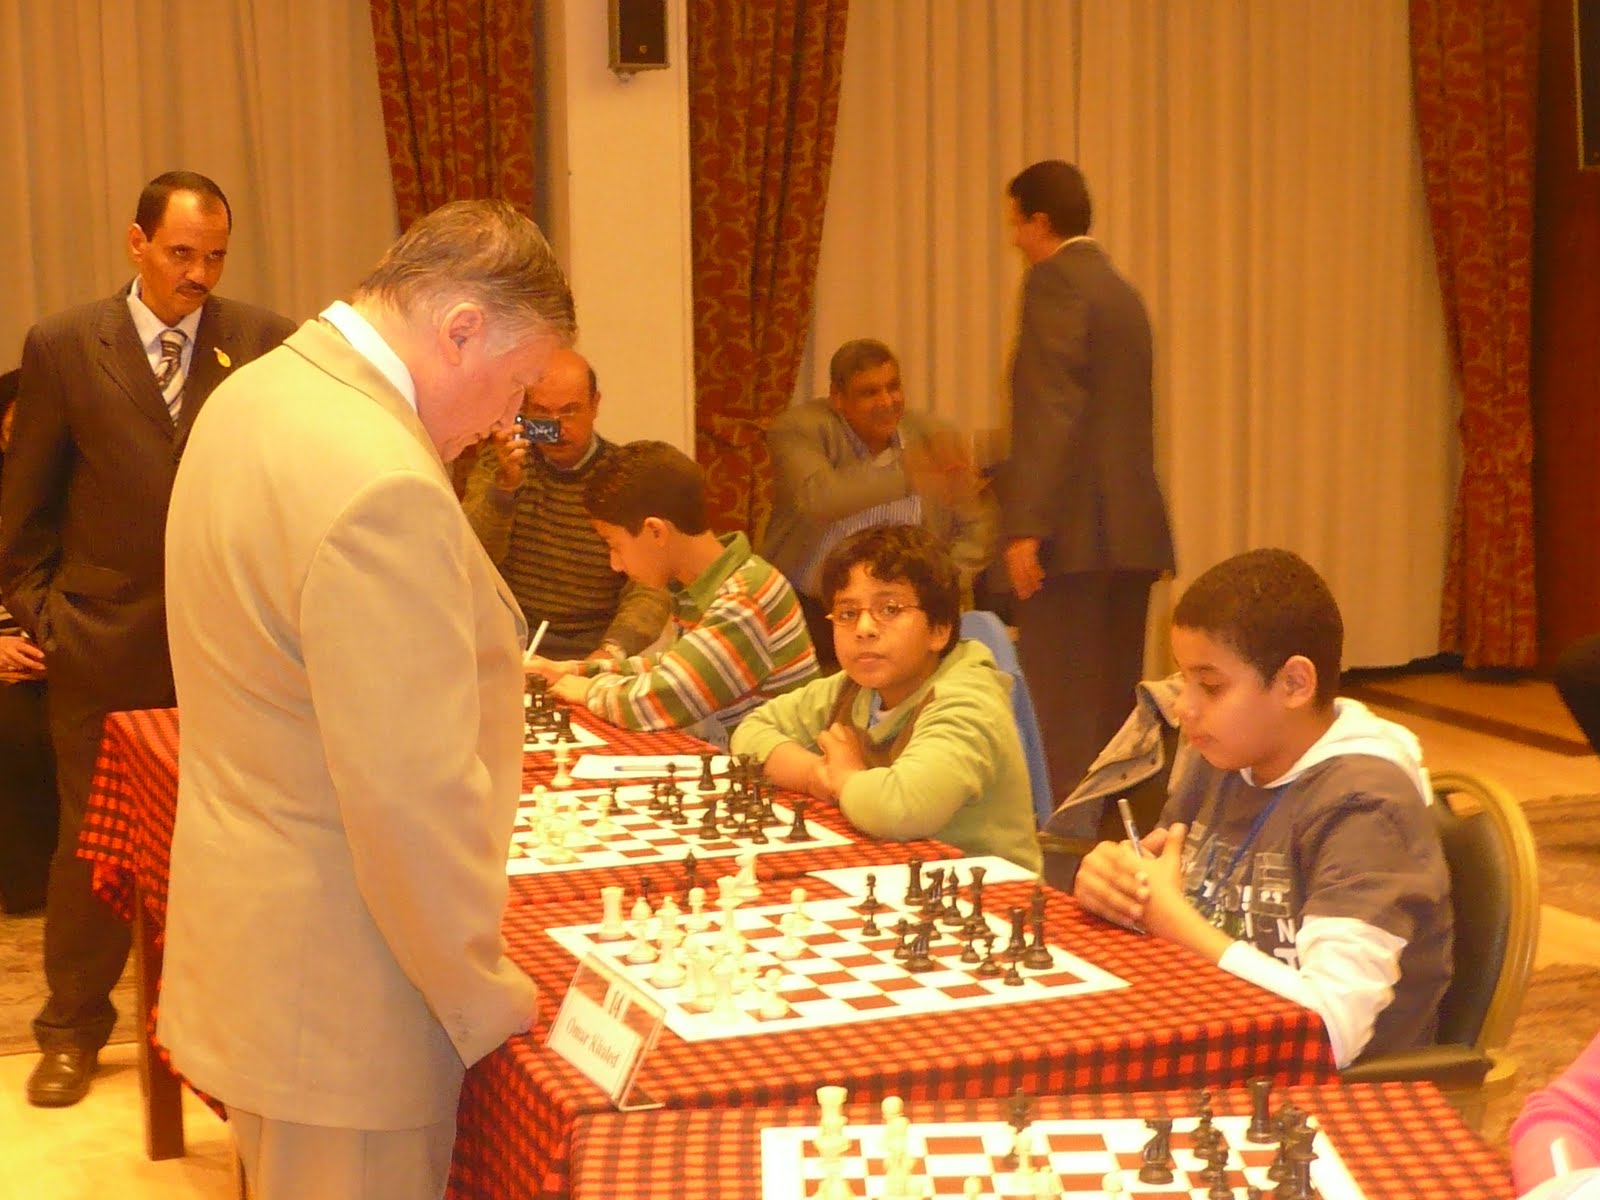 World chess champion Anatoly Karpov having a simultaneous display